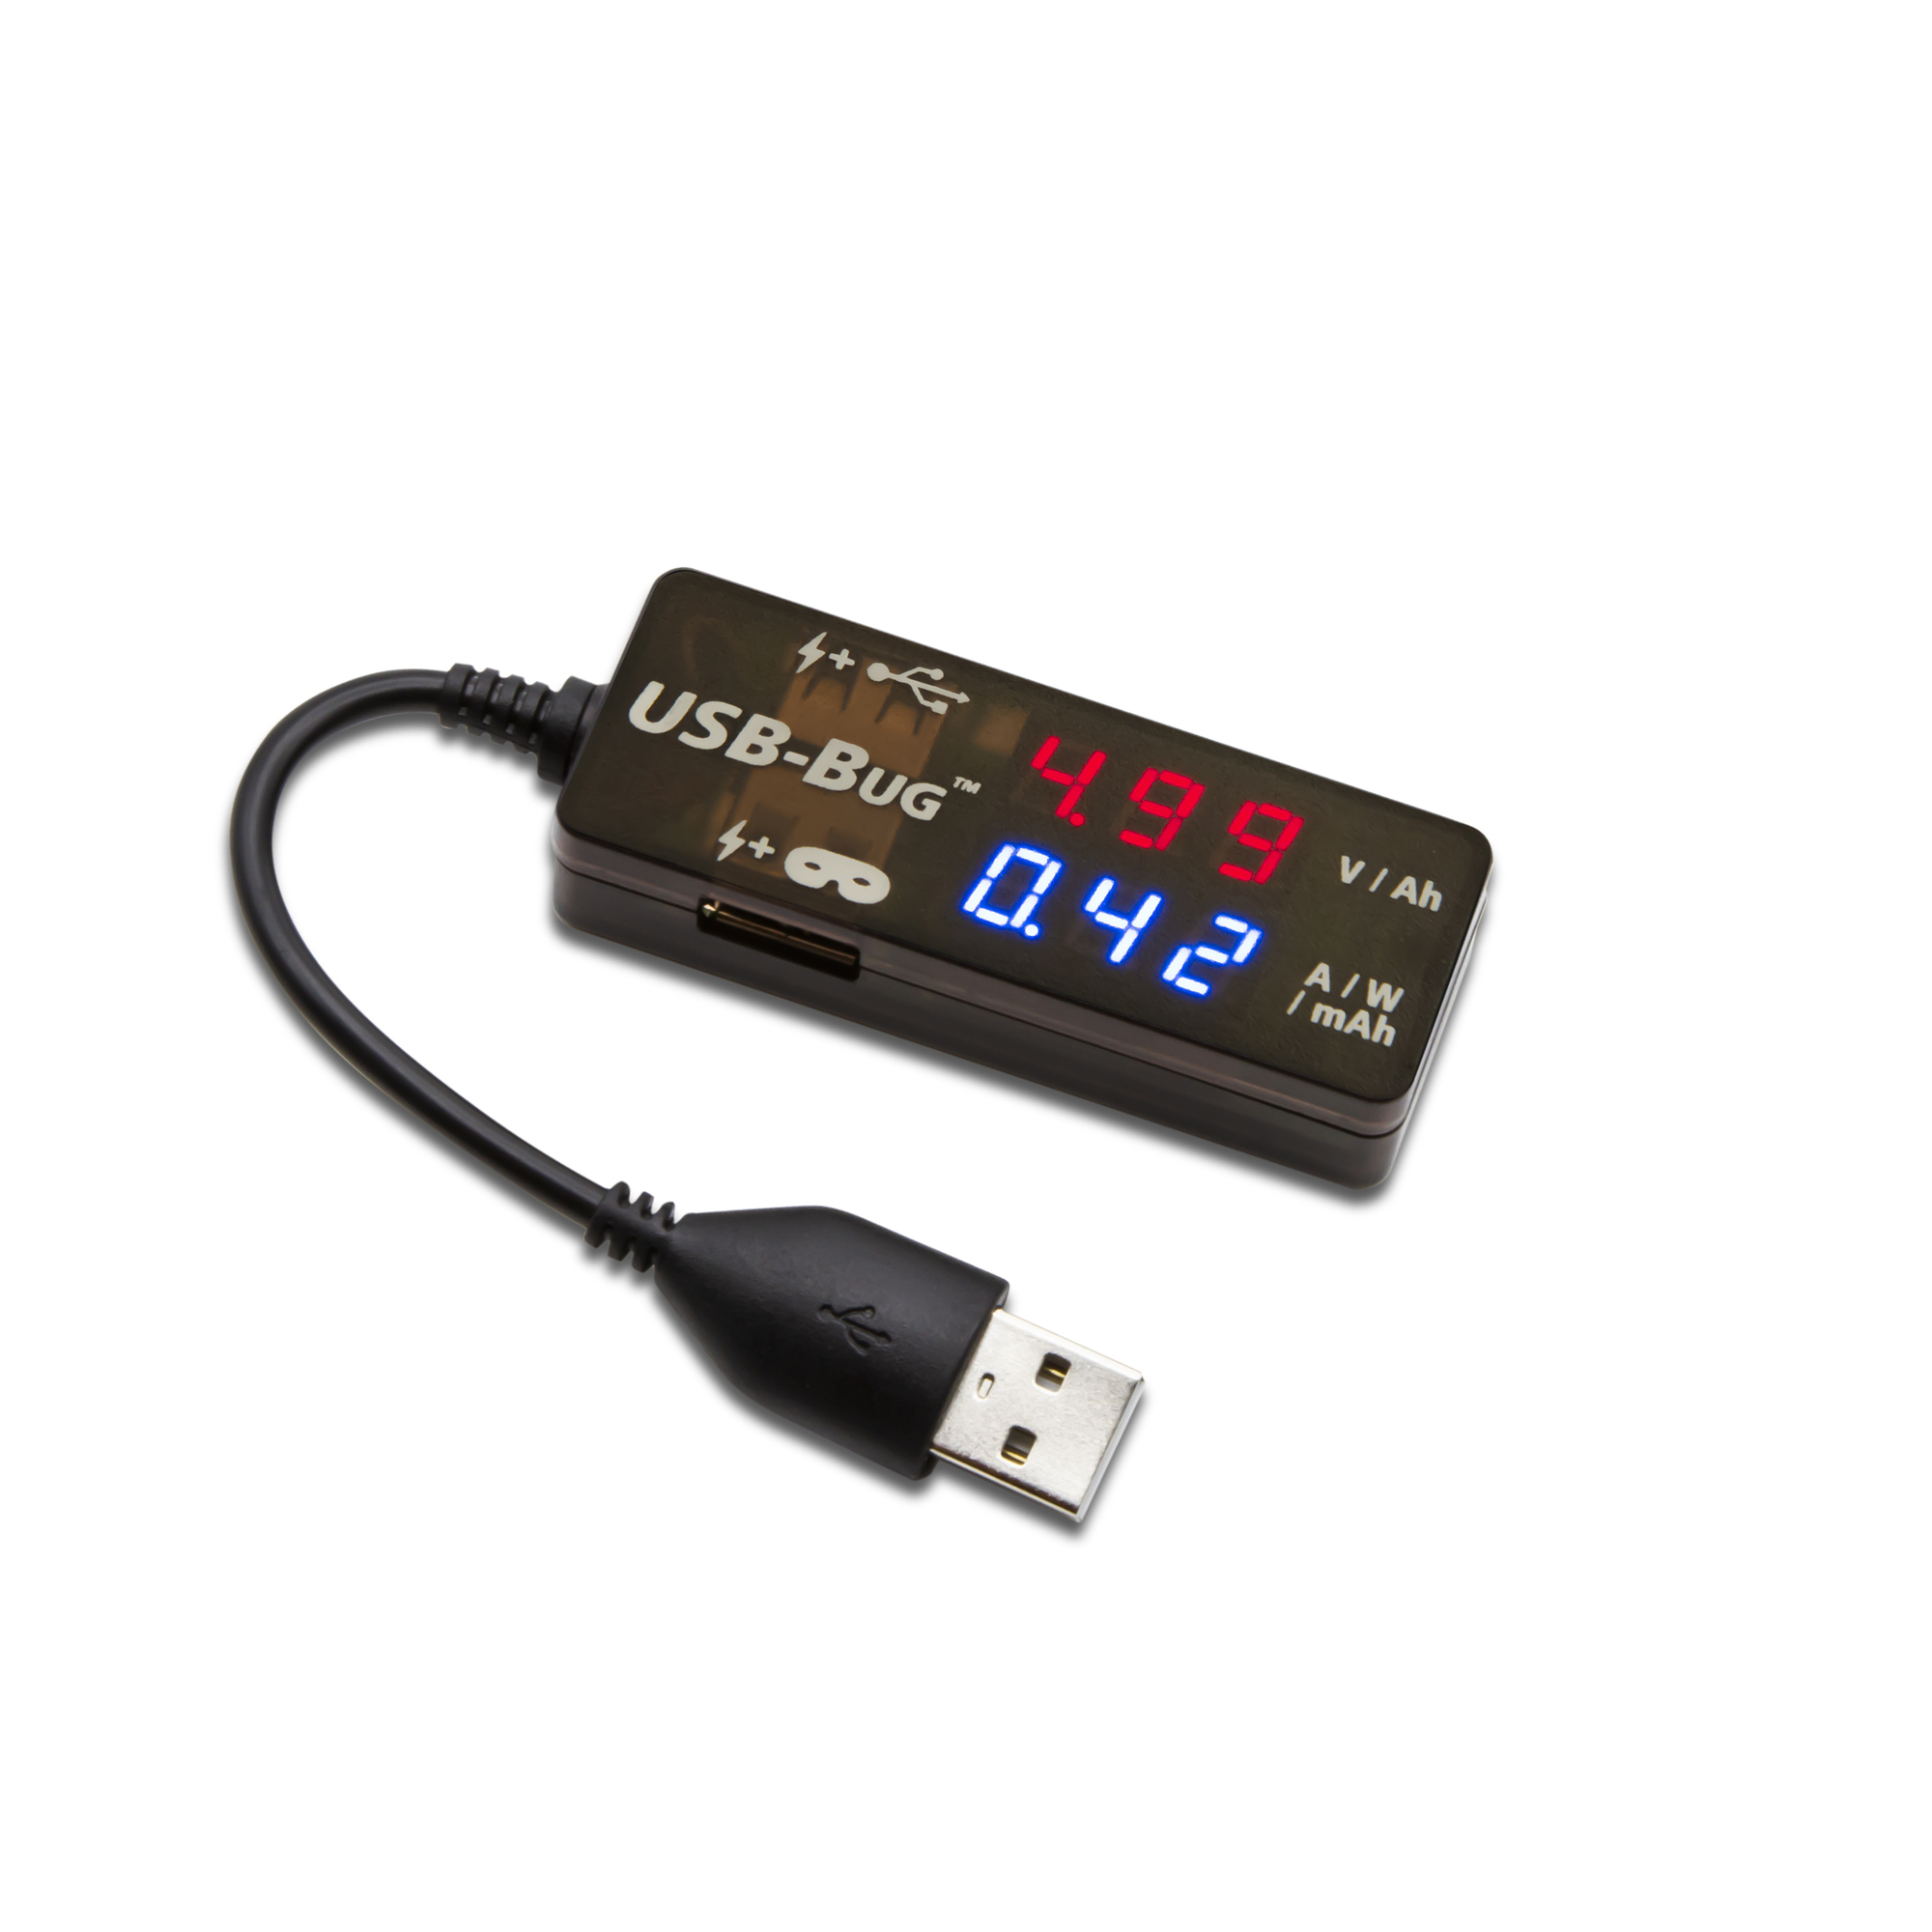 Triplett, Inline USB Tester, dual charging ports and masking, Model USB-BUG